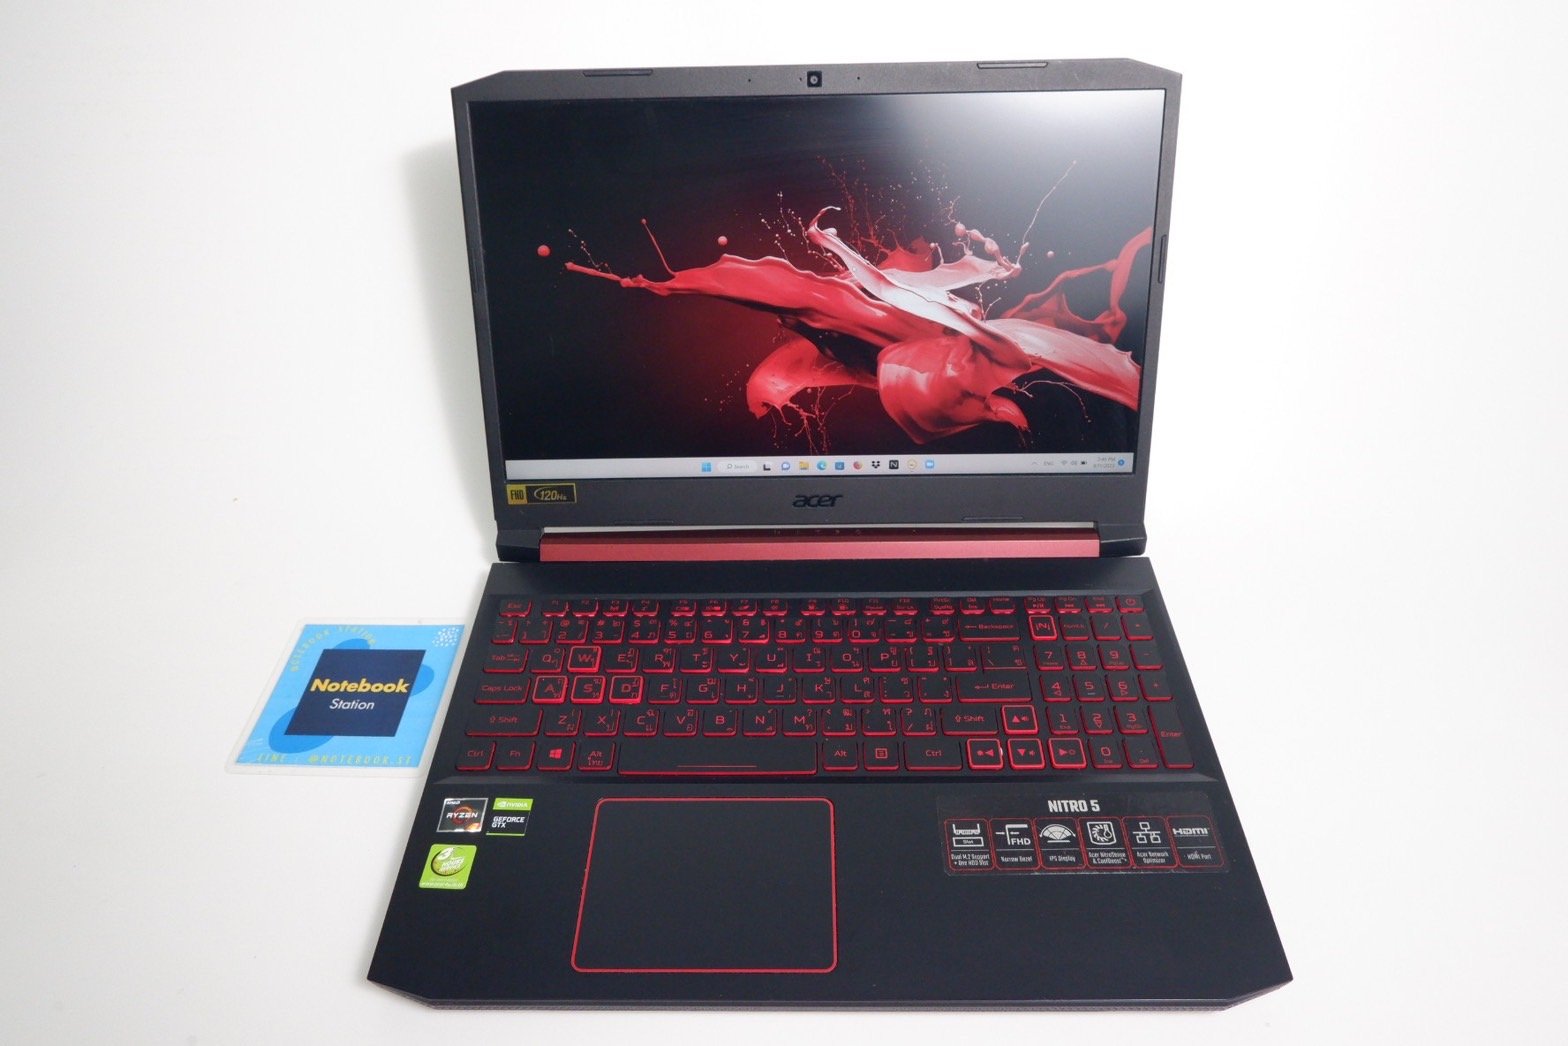 Acer nitro5 Ryzen7-3750H ram8 gtx1650 ssd512 จอ120Hz คีย์บอร์ดไฟสีแดง เพียง13900.-